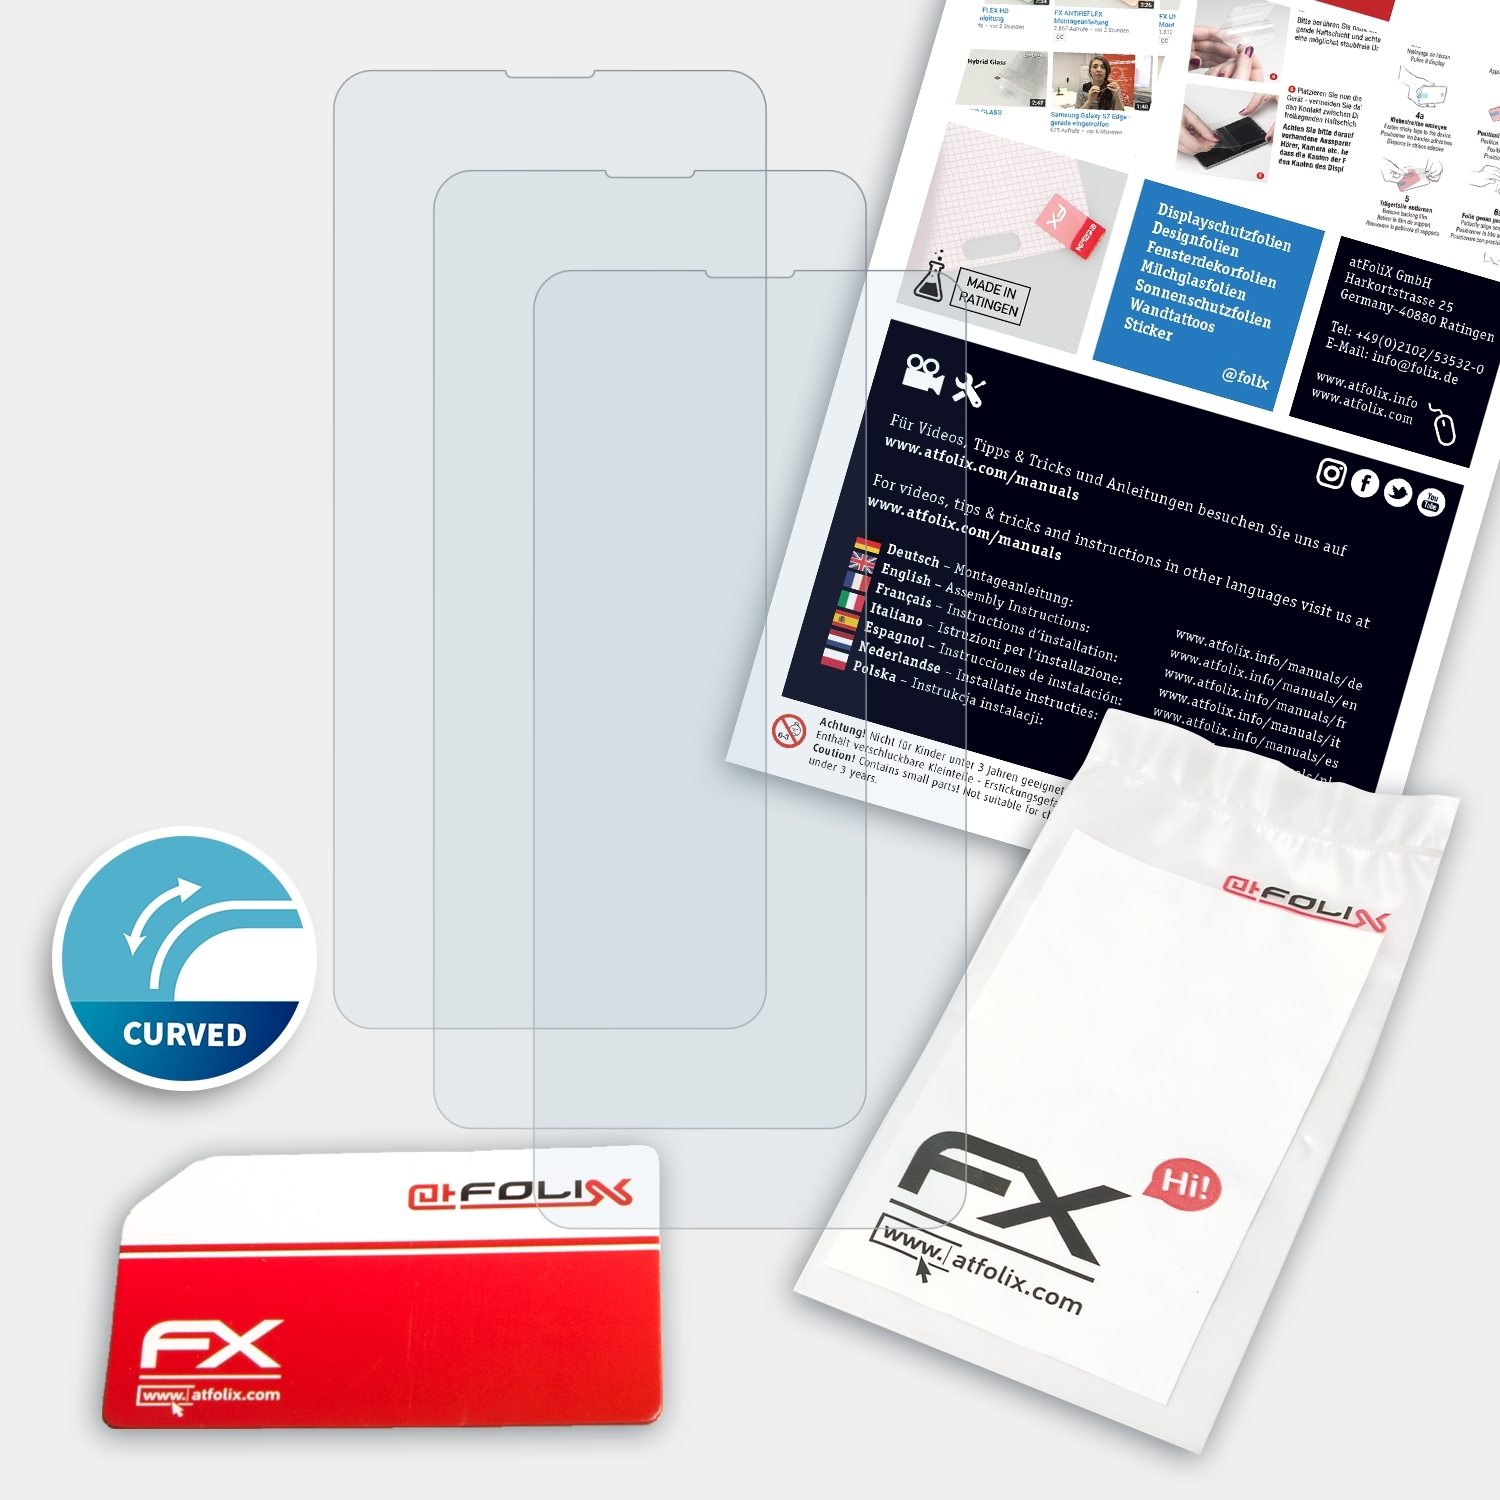 FX-ActiFleX Displayschutz(für ATFOLIX 7 (ZS671KS)) Asus Pro 3x ZenFone